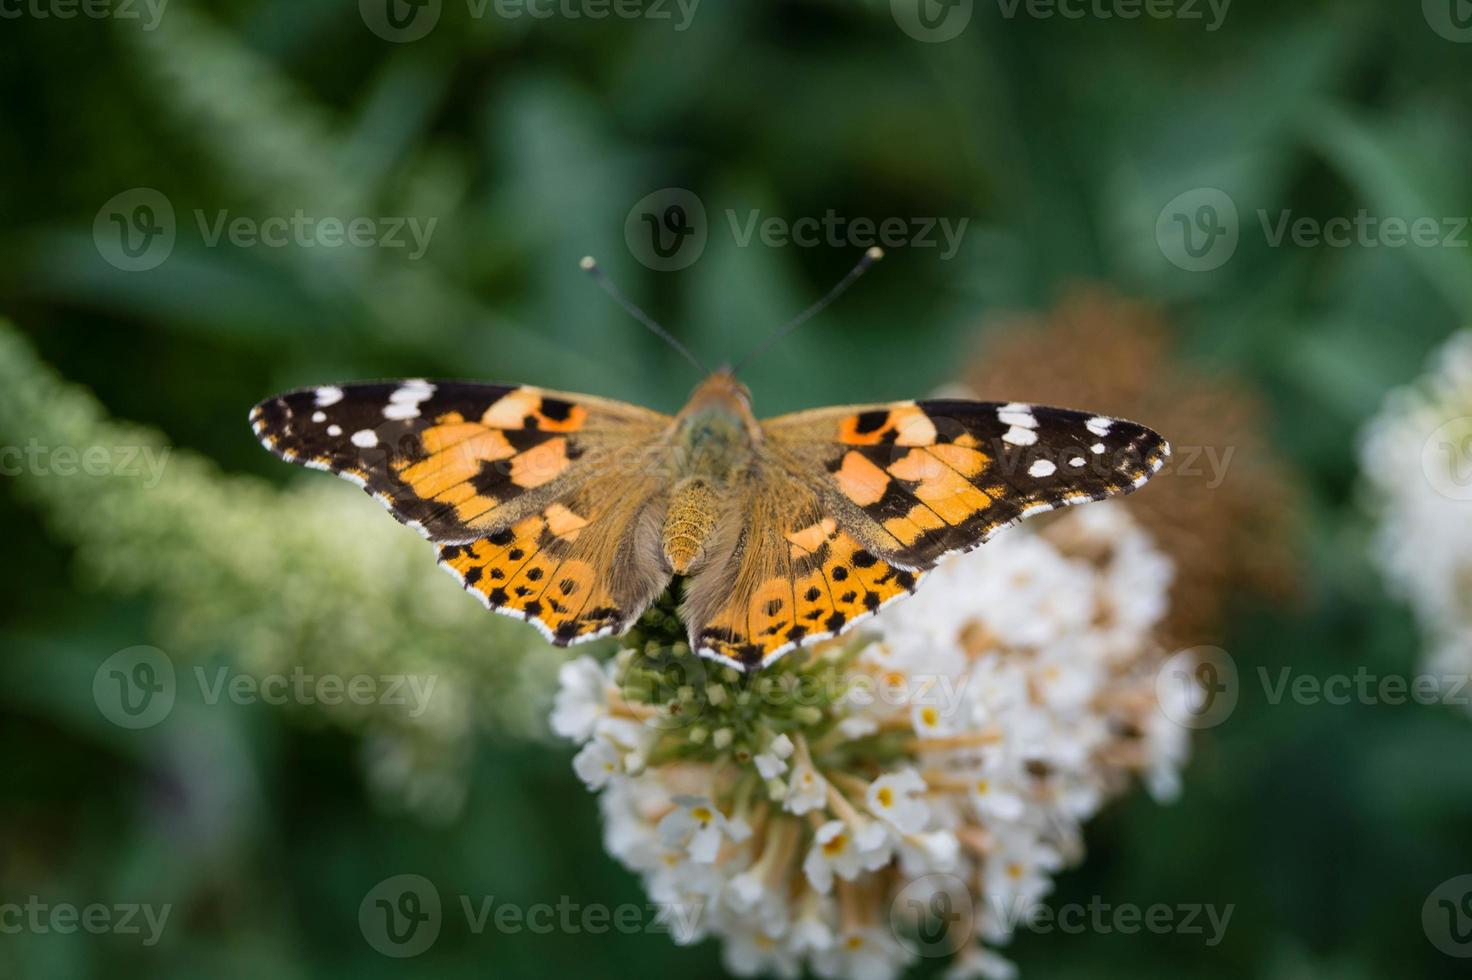 vlinder vanessa cardui of cynthia cardui in de tuin foto